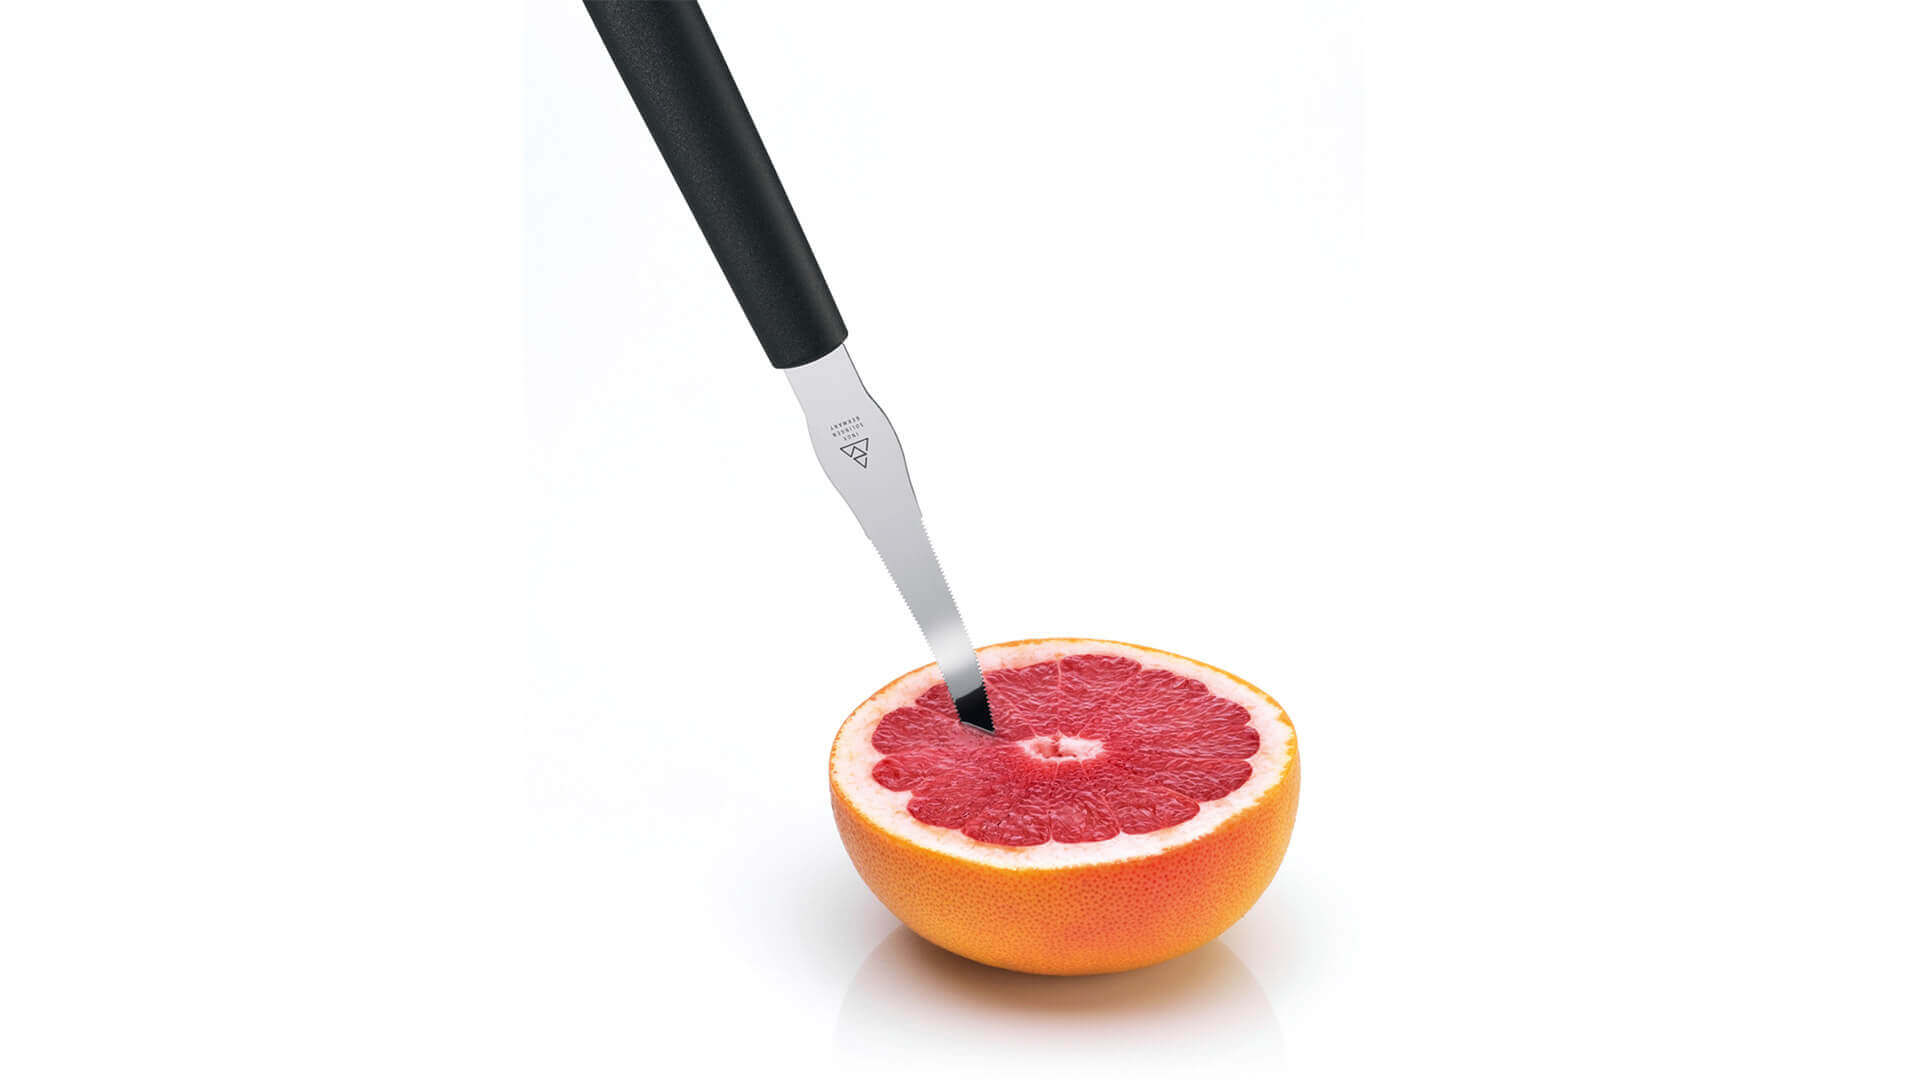 triangle-grapefruitmesser-orangen-messer-schaeler